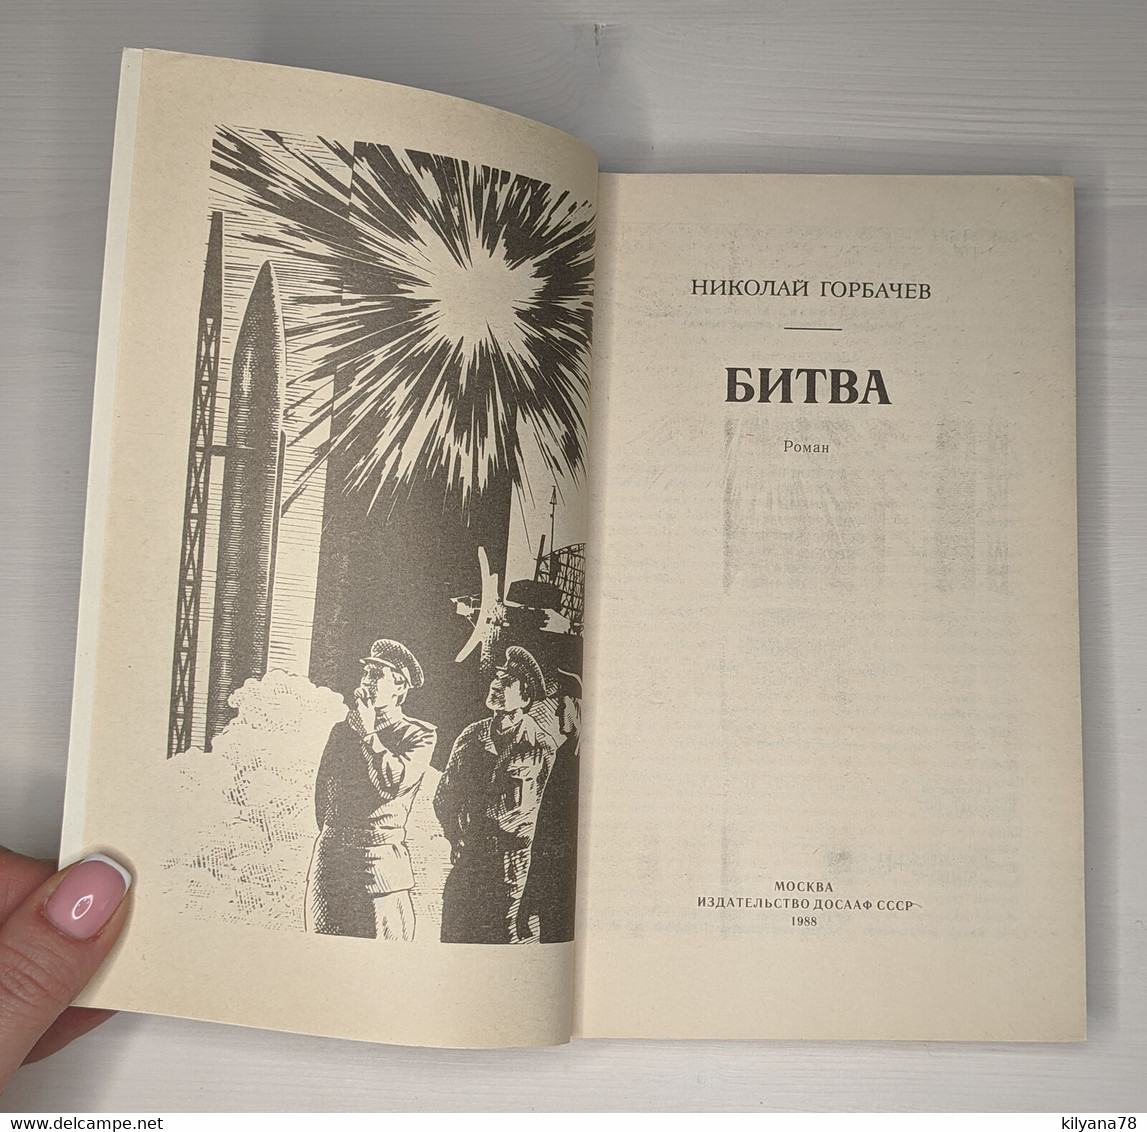 BATTLE By N. Gorbachev Military Missile Defense Memories БИТВА Russian Book - Lingue Slave